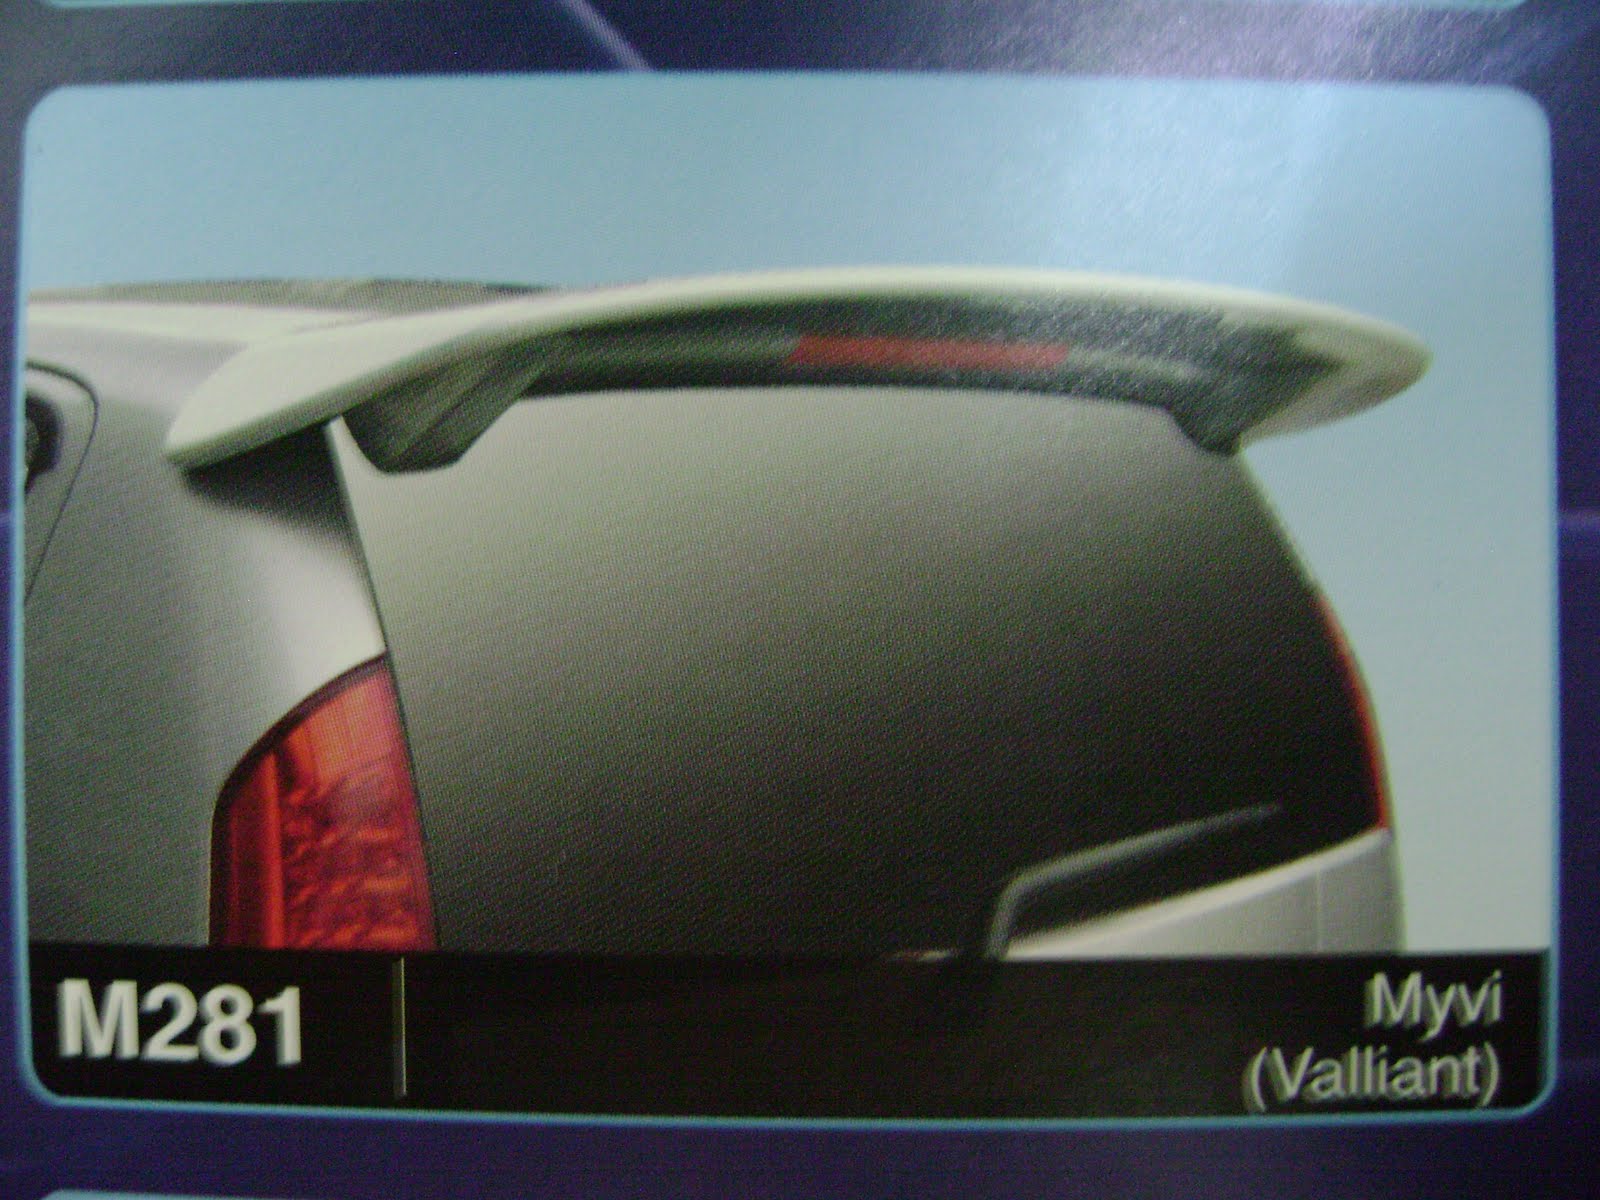 REV MOTORSPORT: myvi rear spoiler and tail gate panel cover.